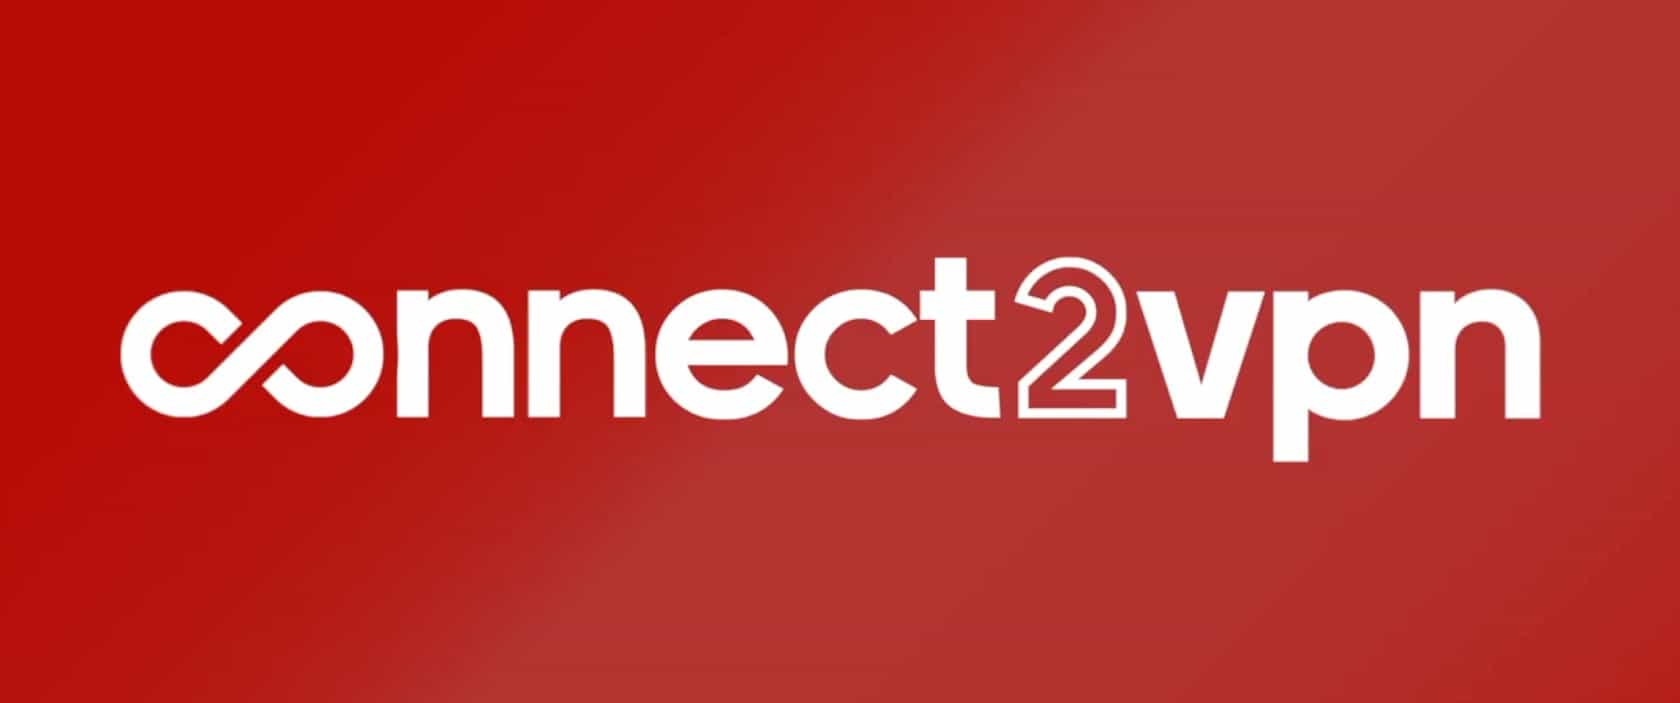 Case screen-casts" Connect2VPN"